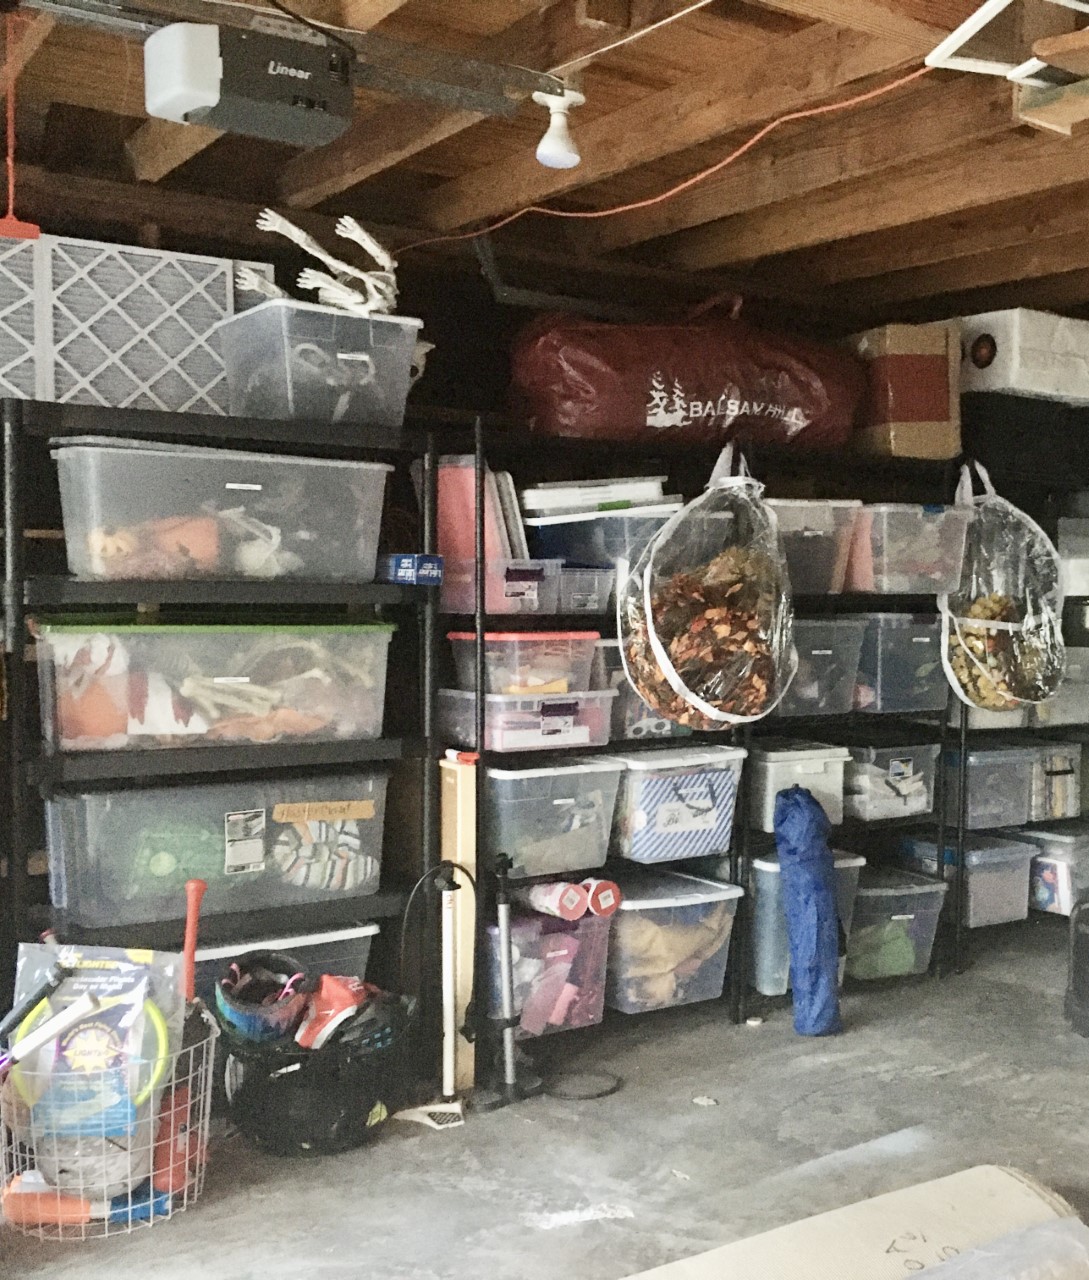 Austin home organizing services - garage after